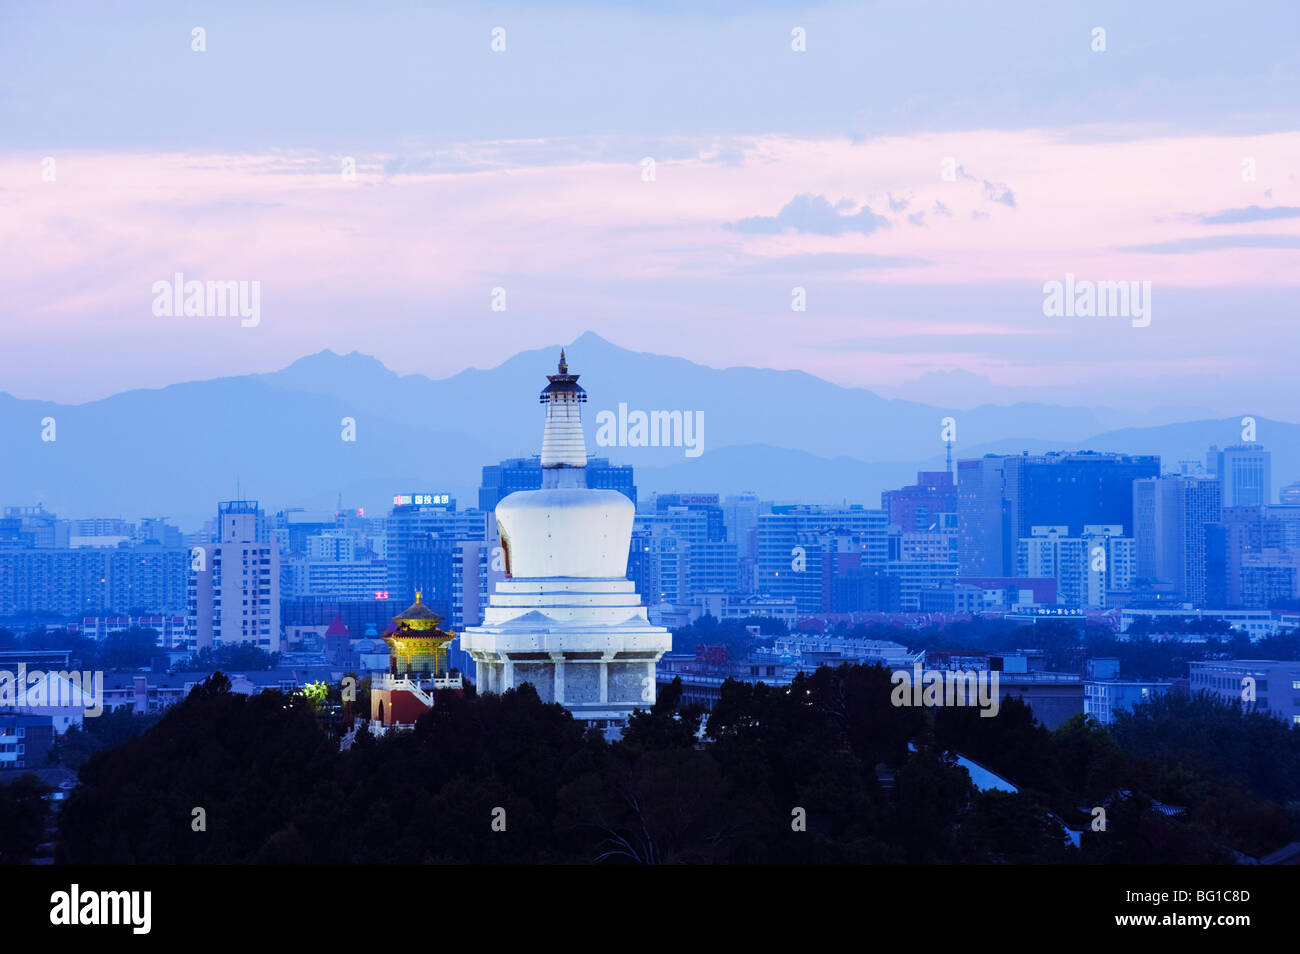 An illuminated White Pagoda and city buildings at sunset, Beihai park, Beijing, China, Asia Stock Photo